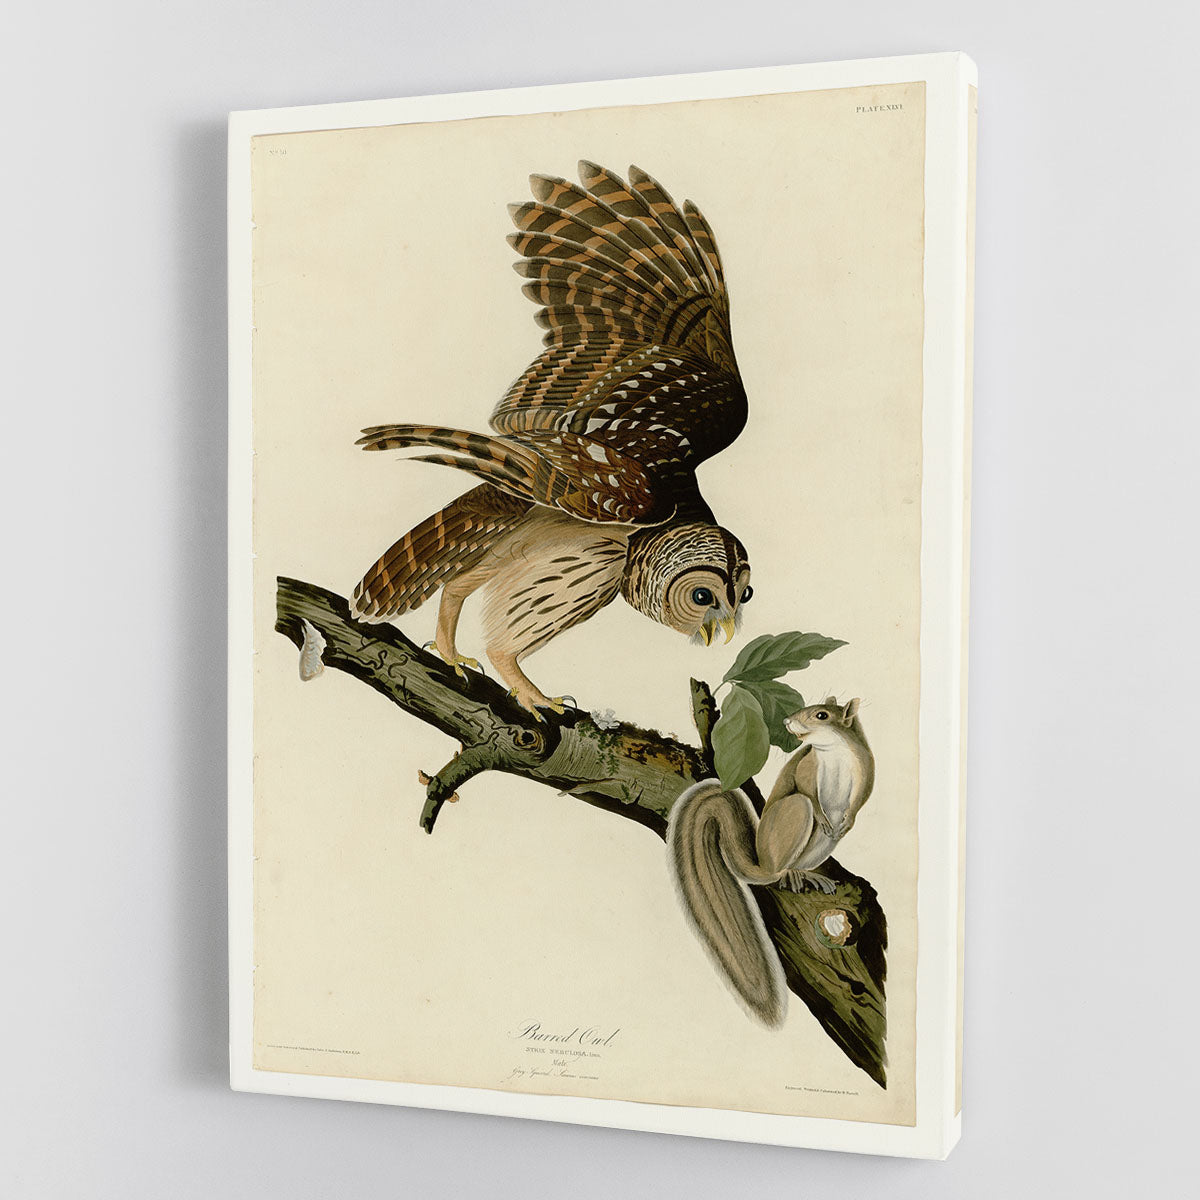 Barred Owl by Audubon Canvas Print or Poster - Canvas Art Rocks - 1